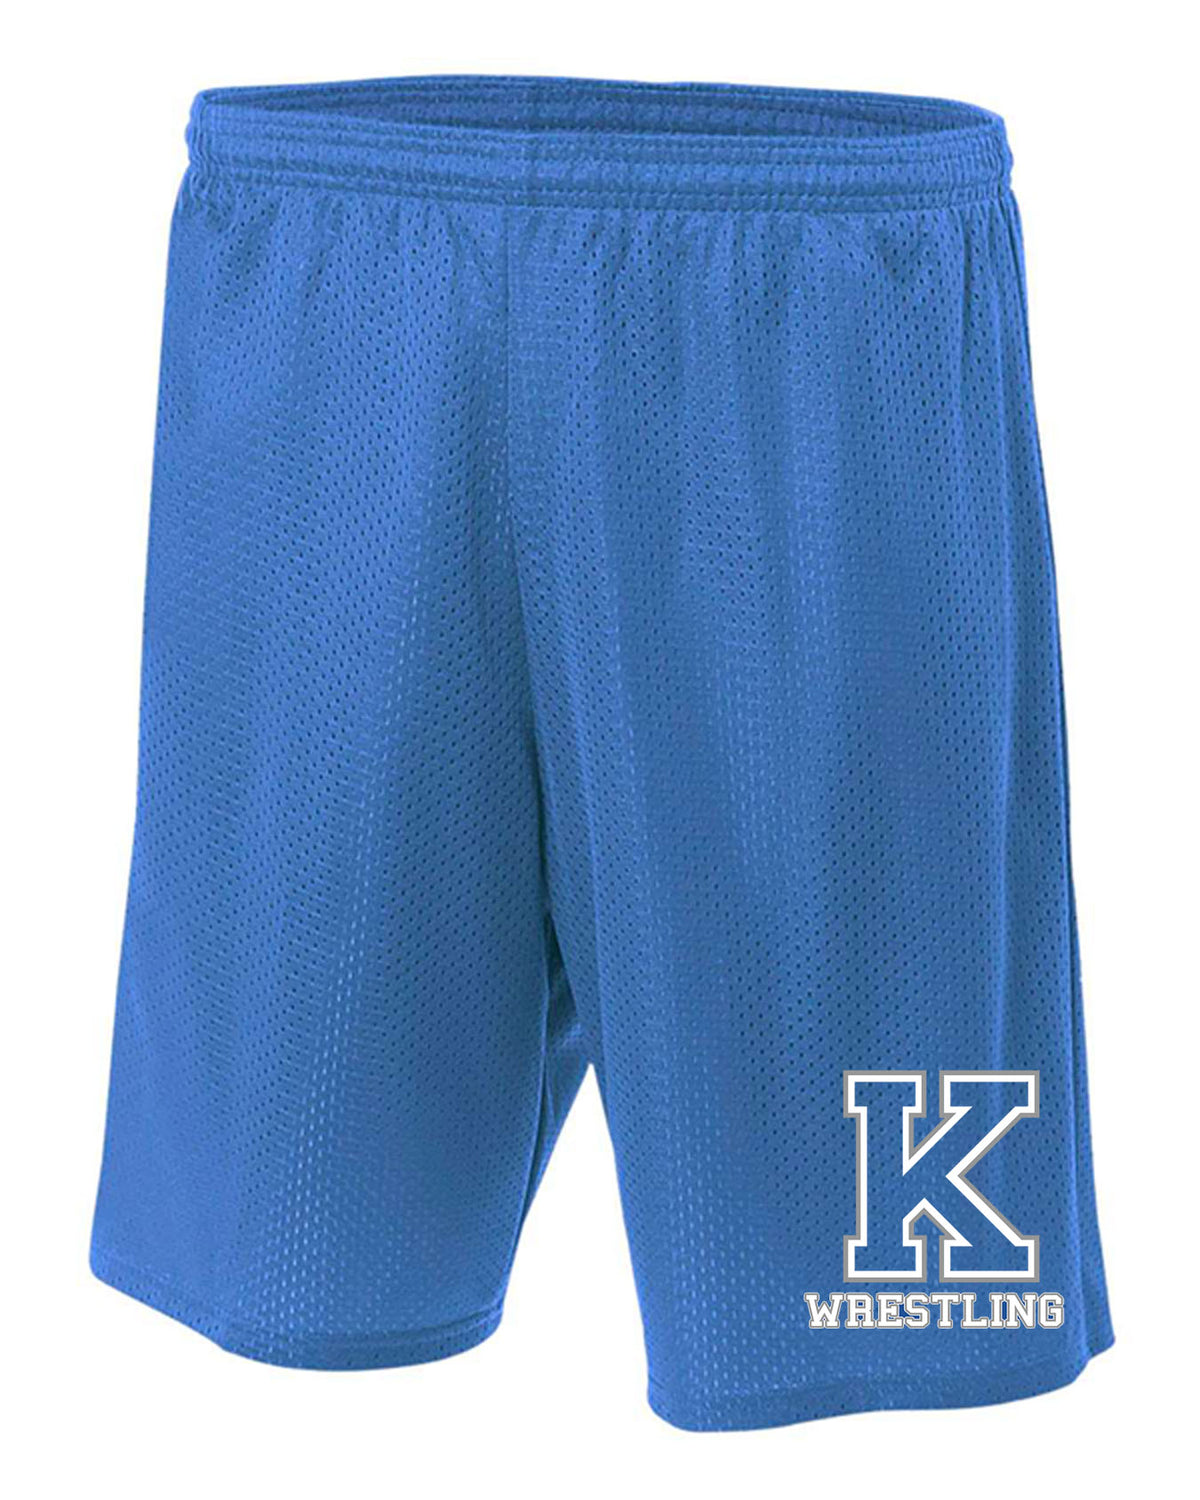 Kittatinny Wrestling Design 6 Mesh Shorts